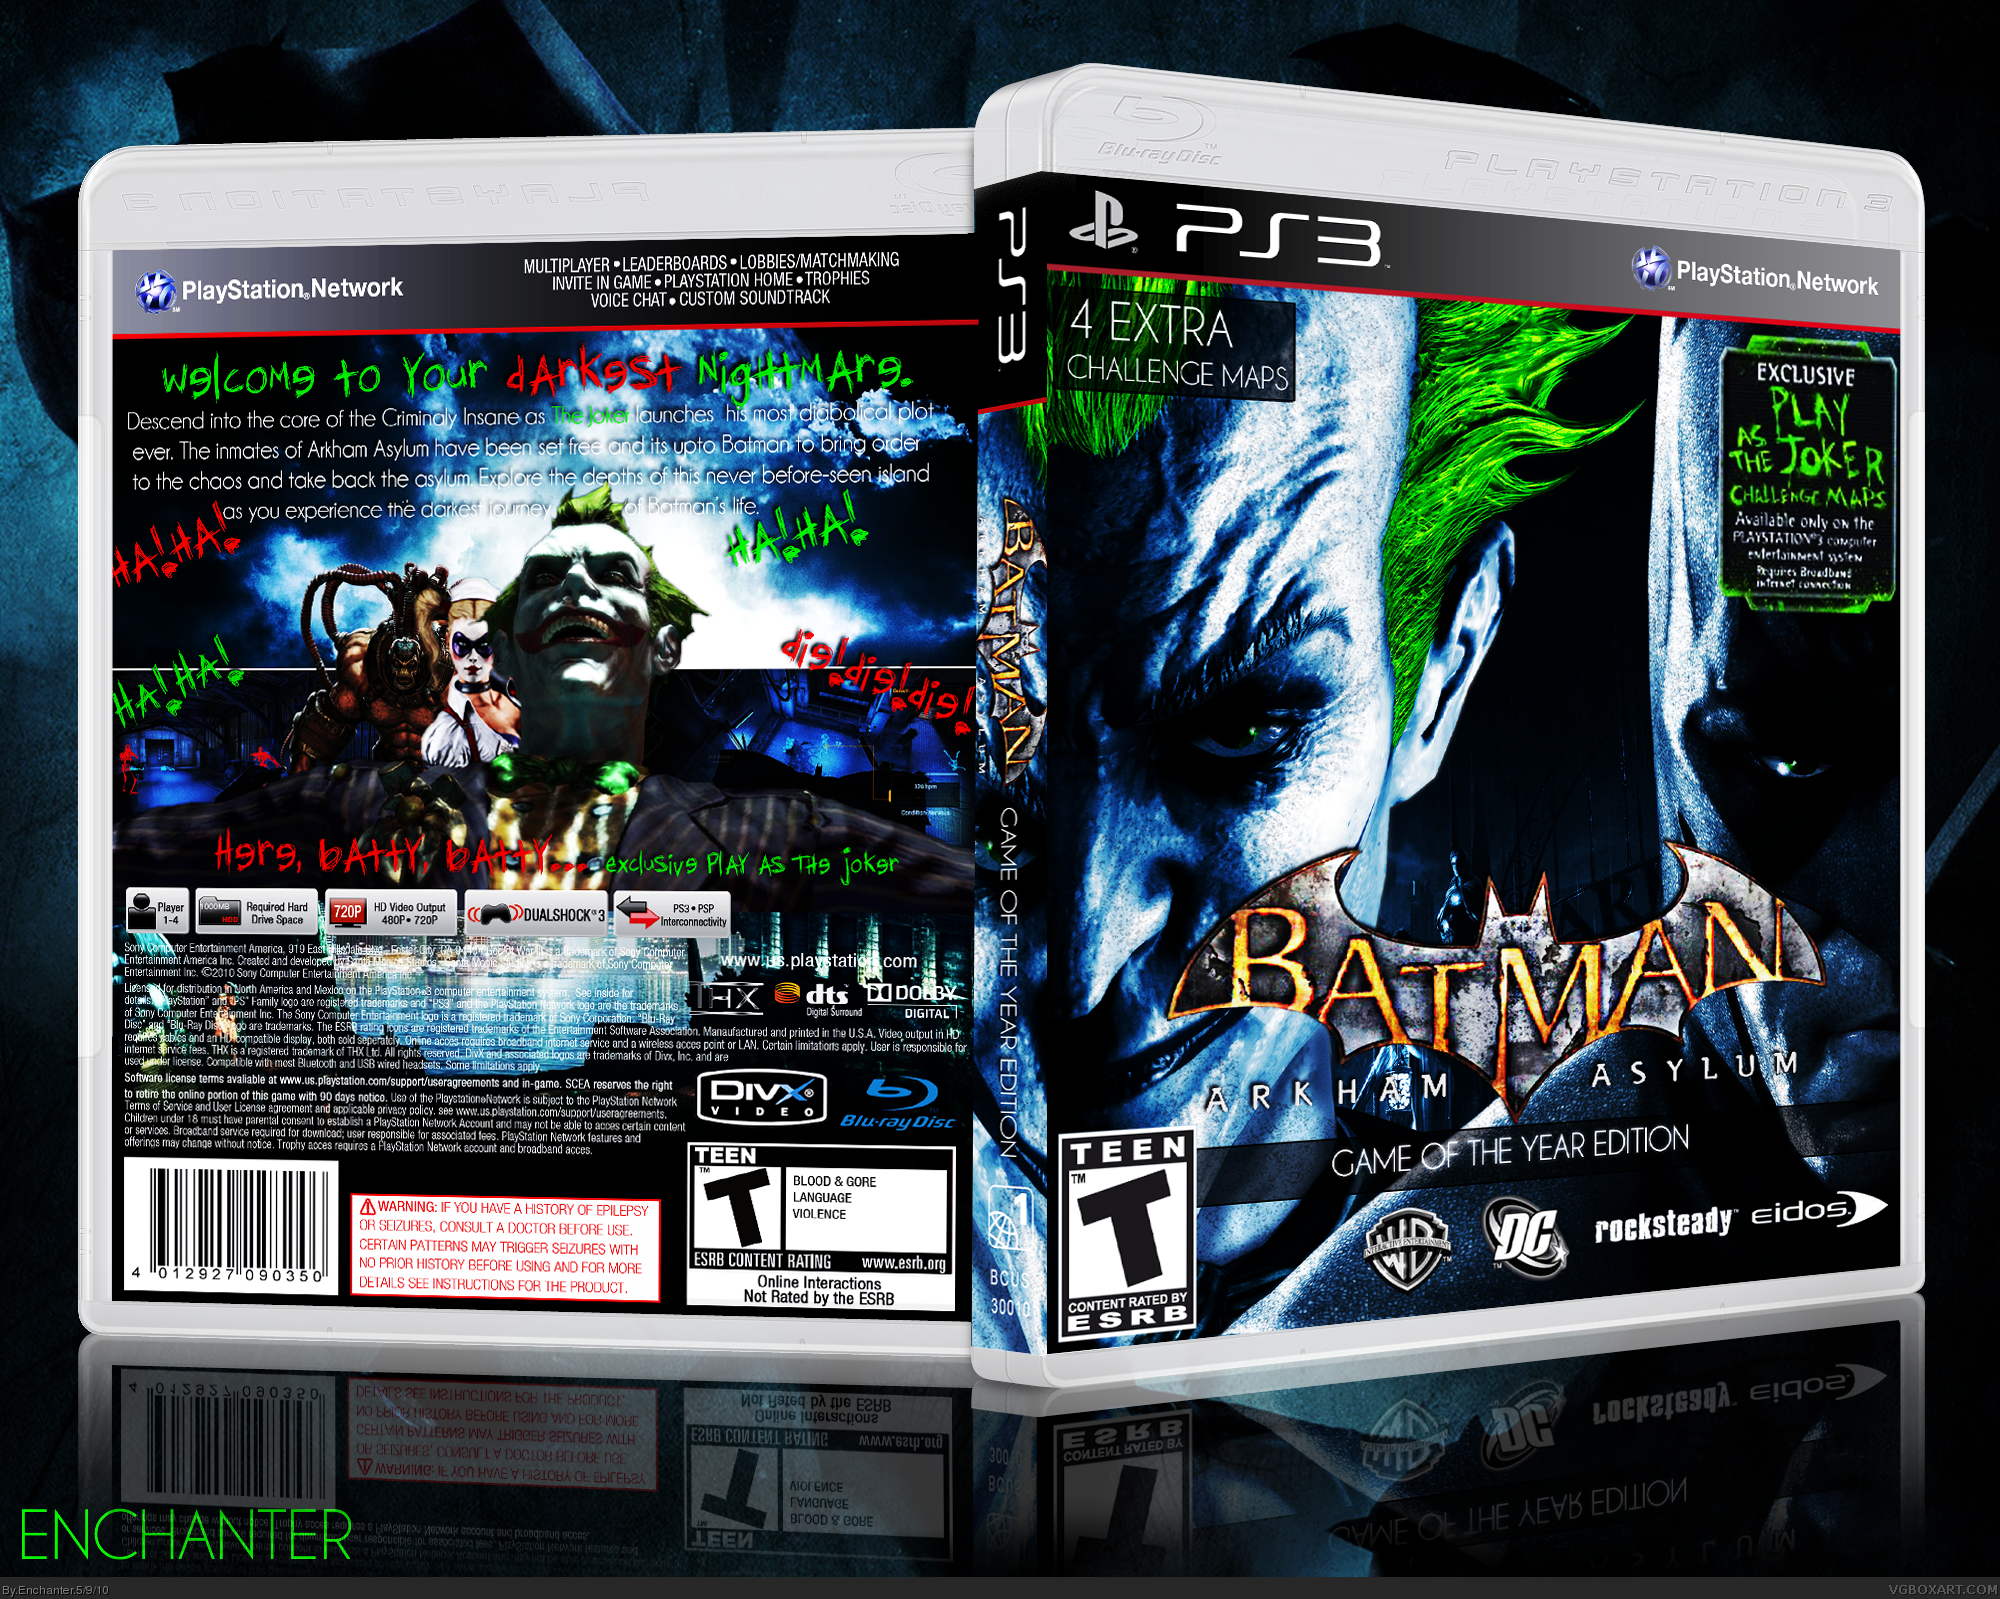 Batman: Arkham Asylum Game of The Year Edition box cover